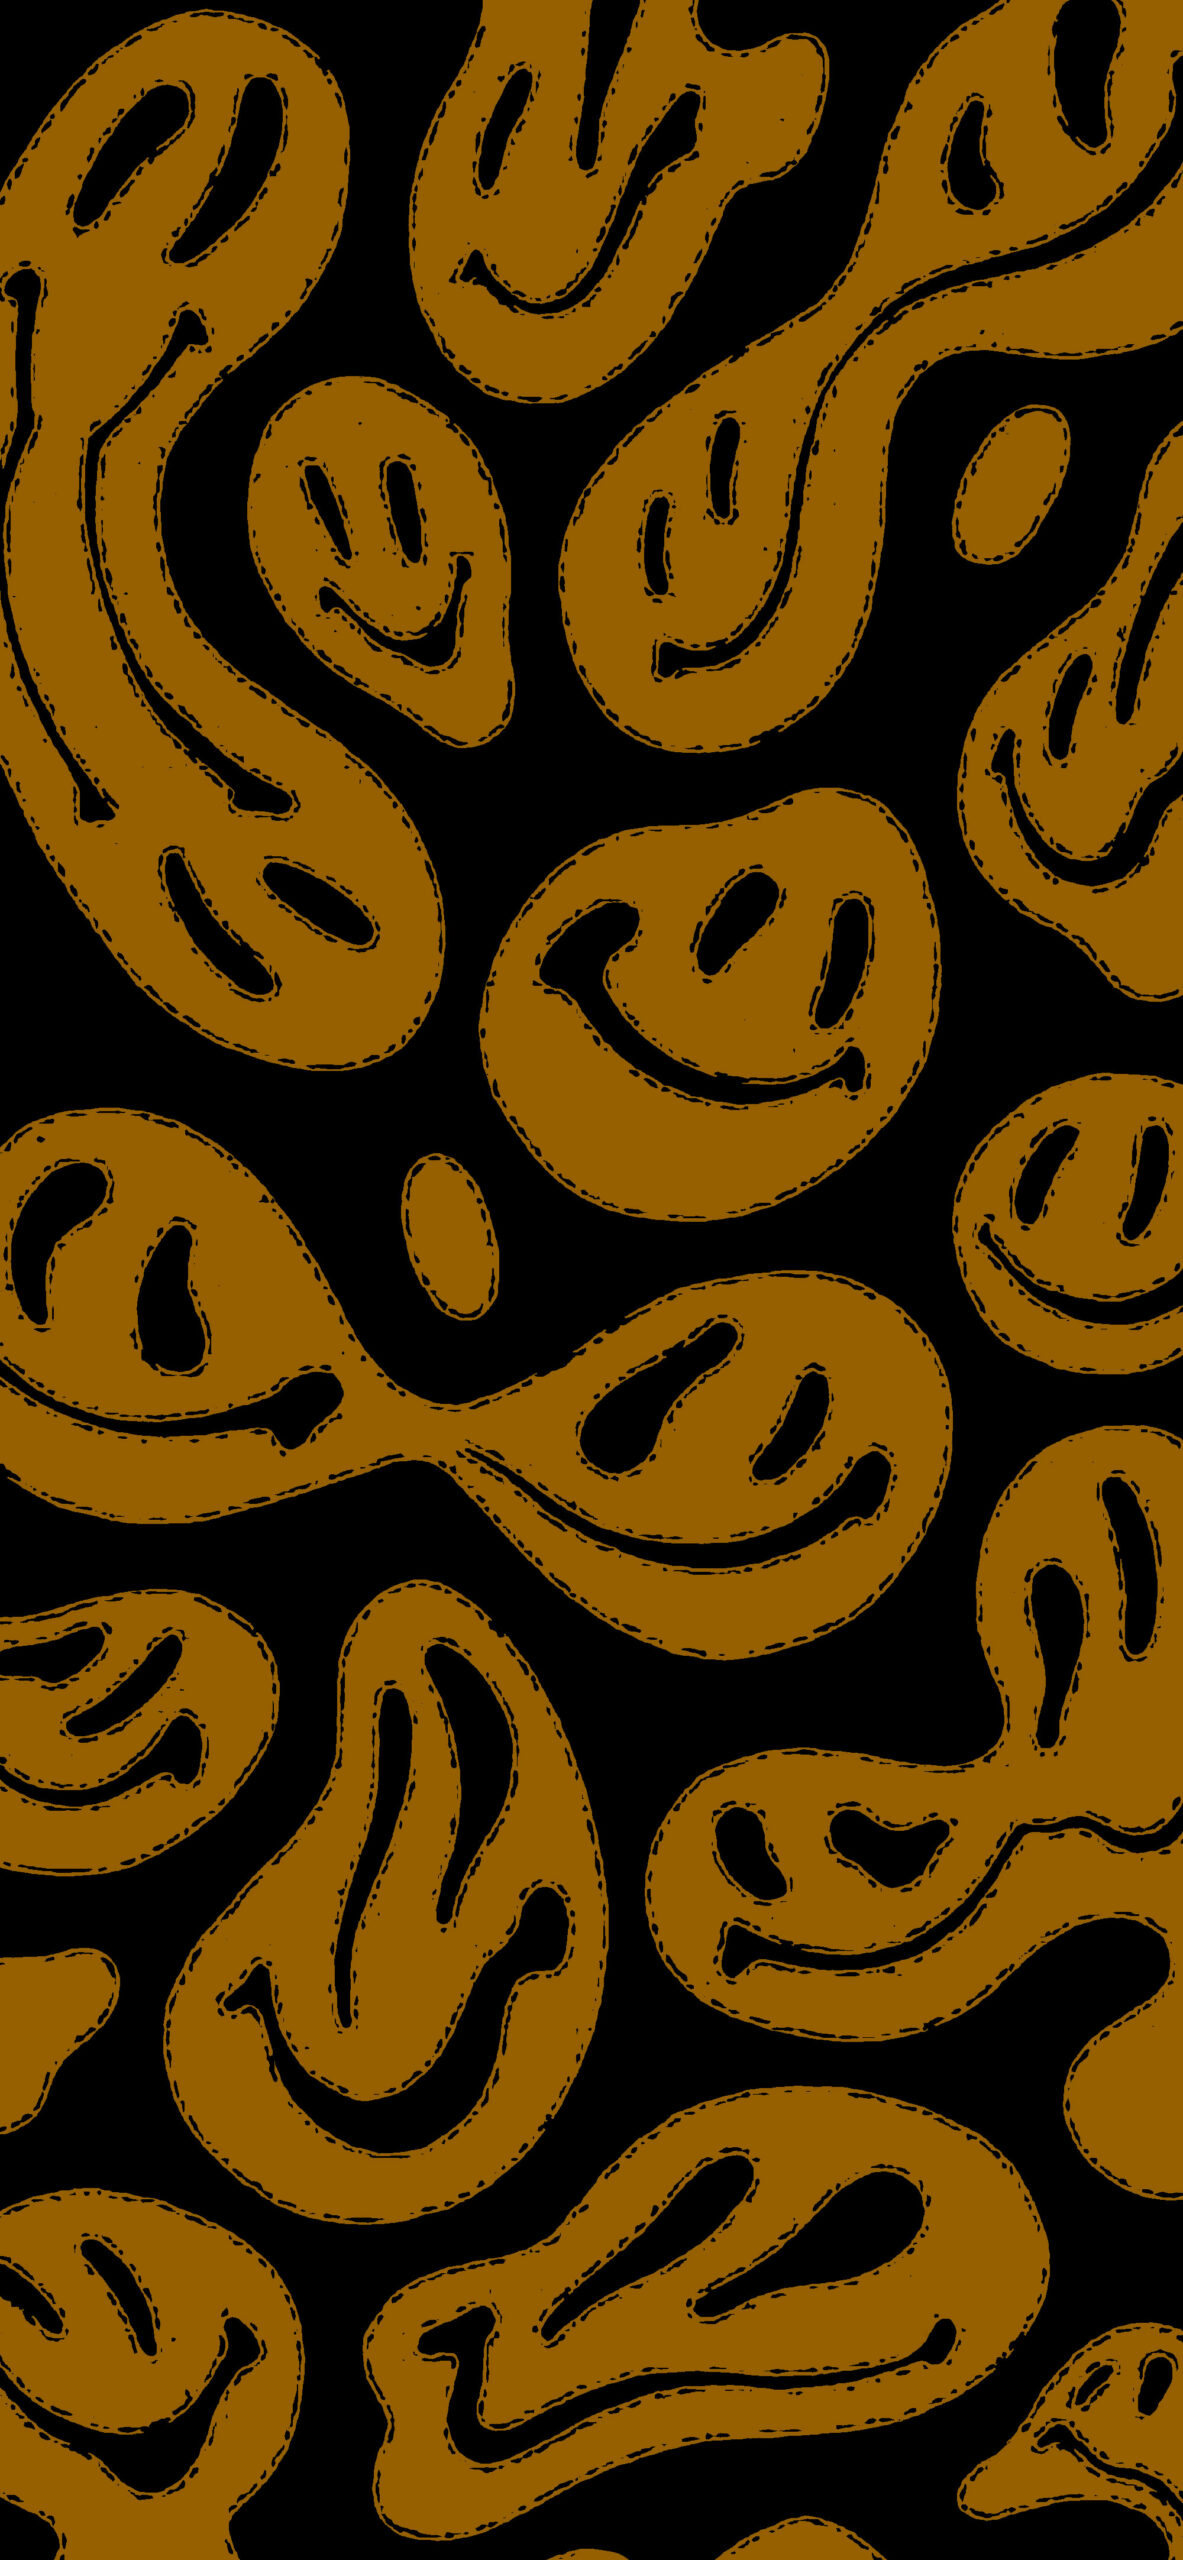 Trippy Smiley Face Wallpaper - Trippy